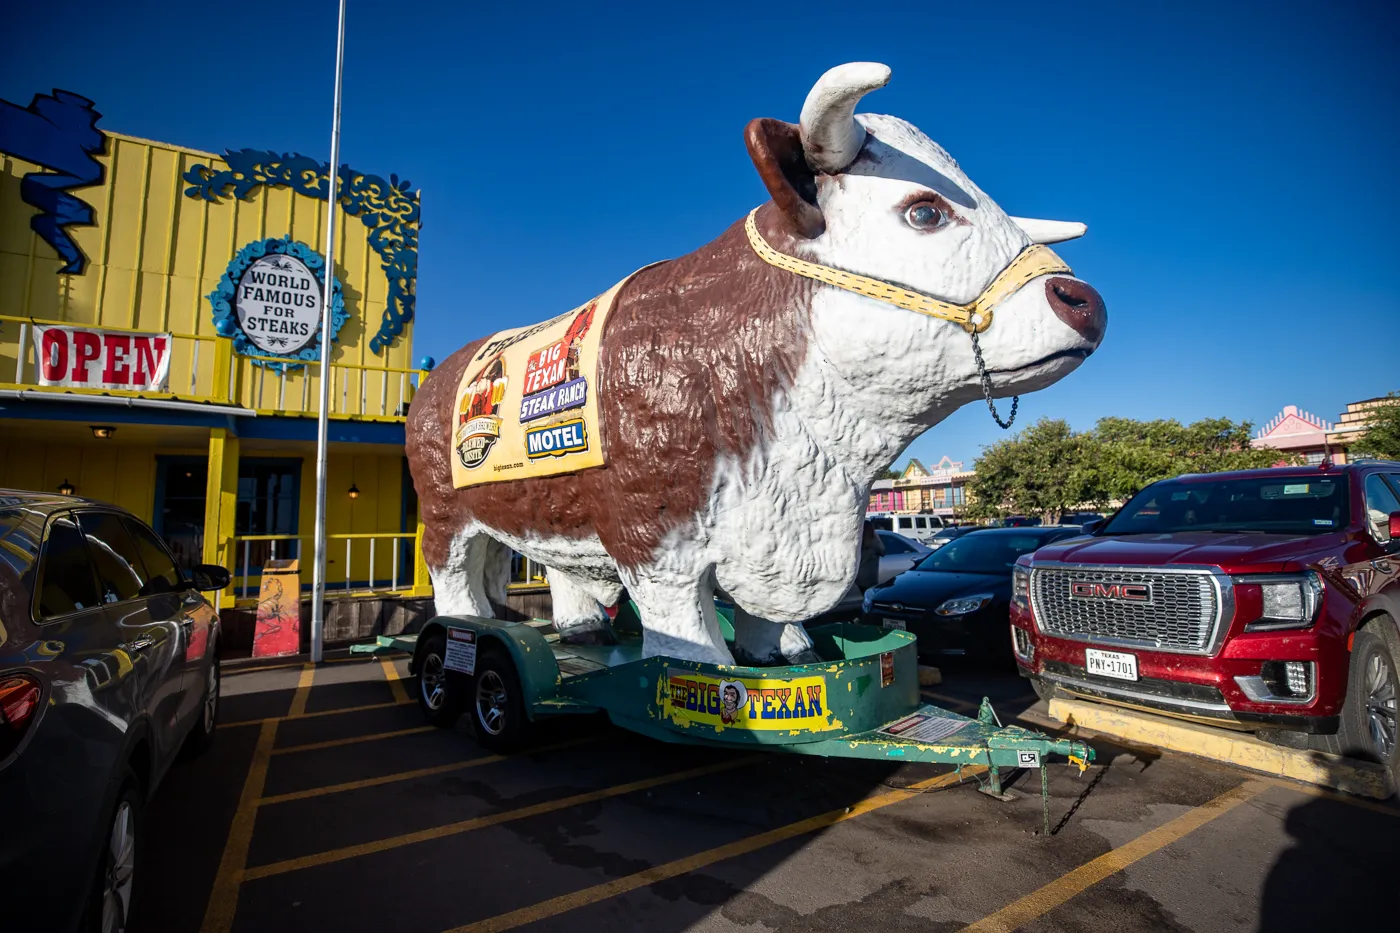 Big steer at the The Big Texan Steak Ranch in Amarillo, Texas